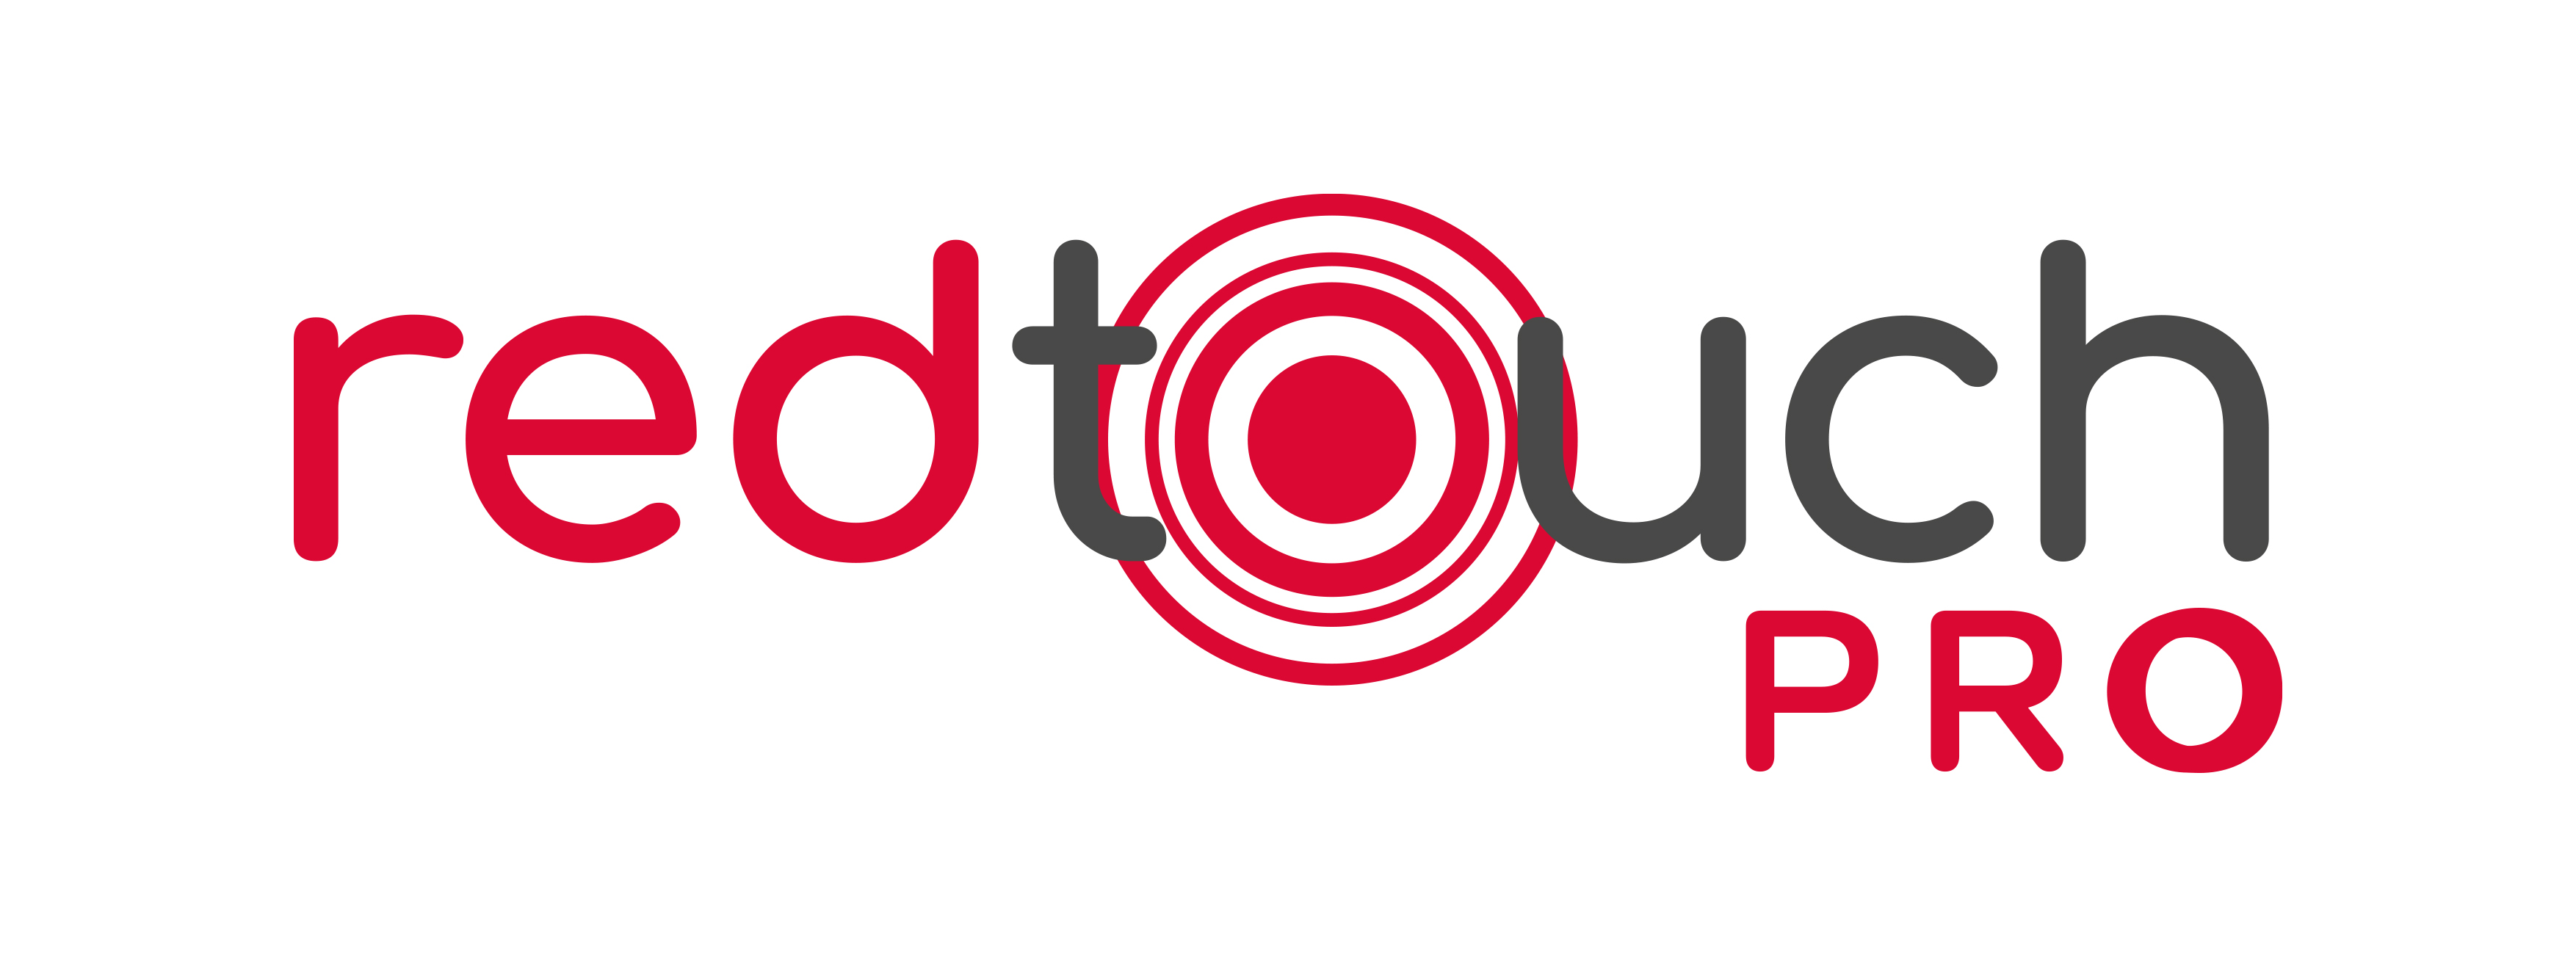 RedTouch pro logo